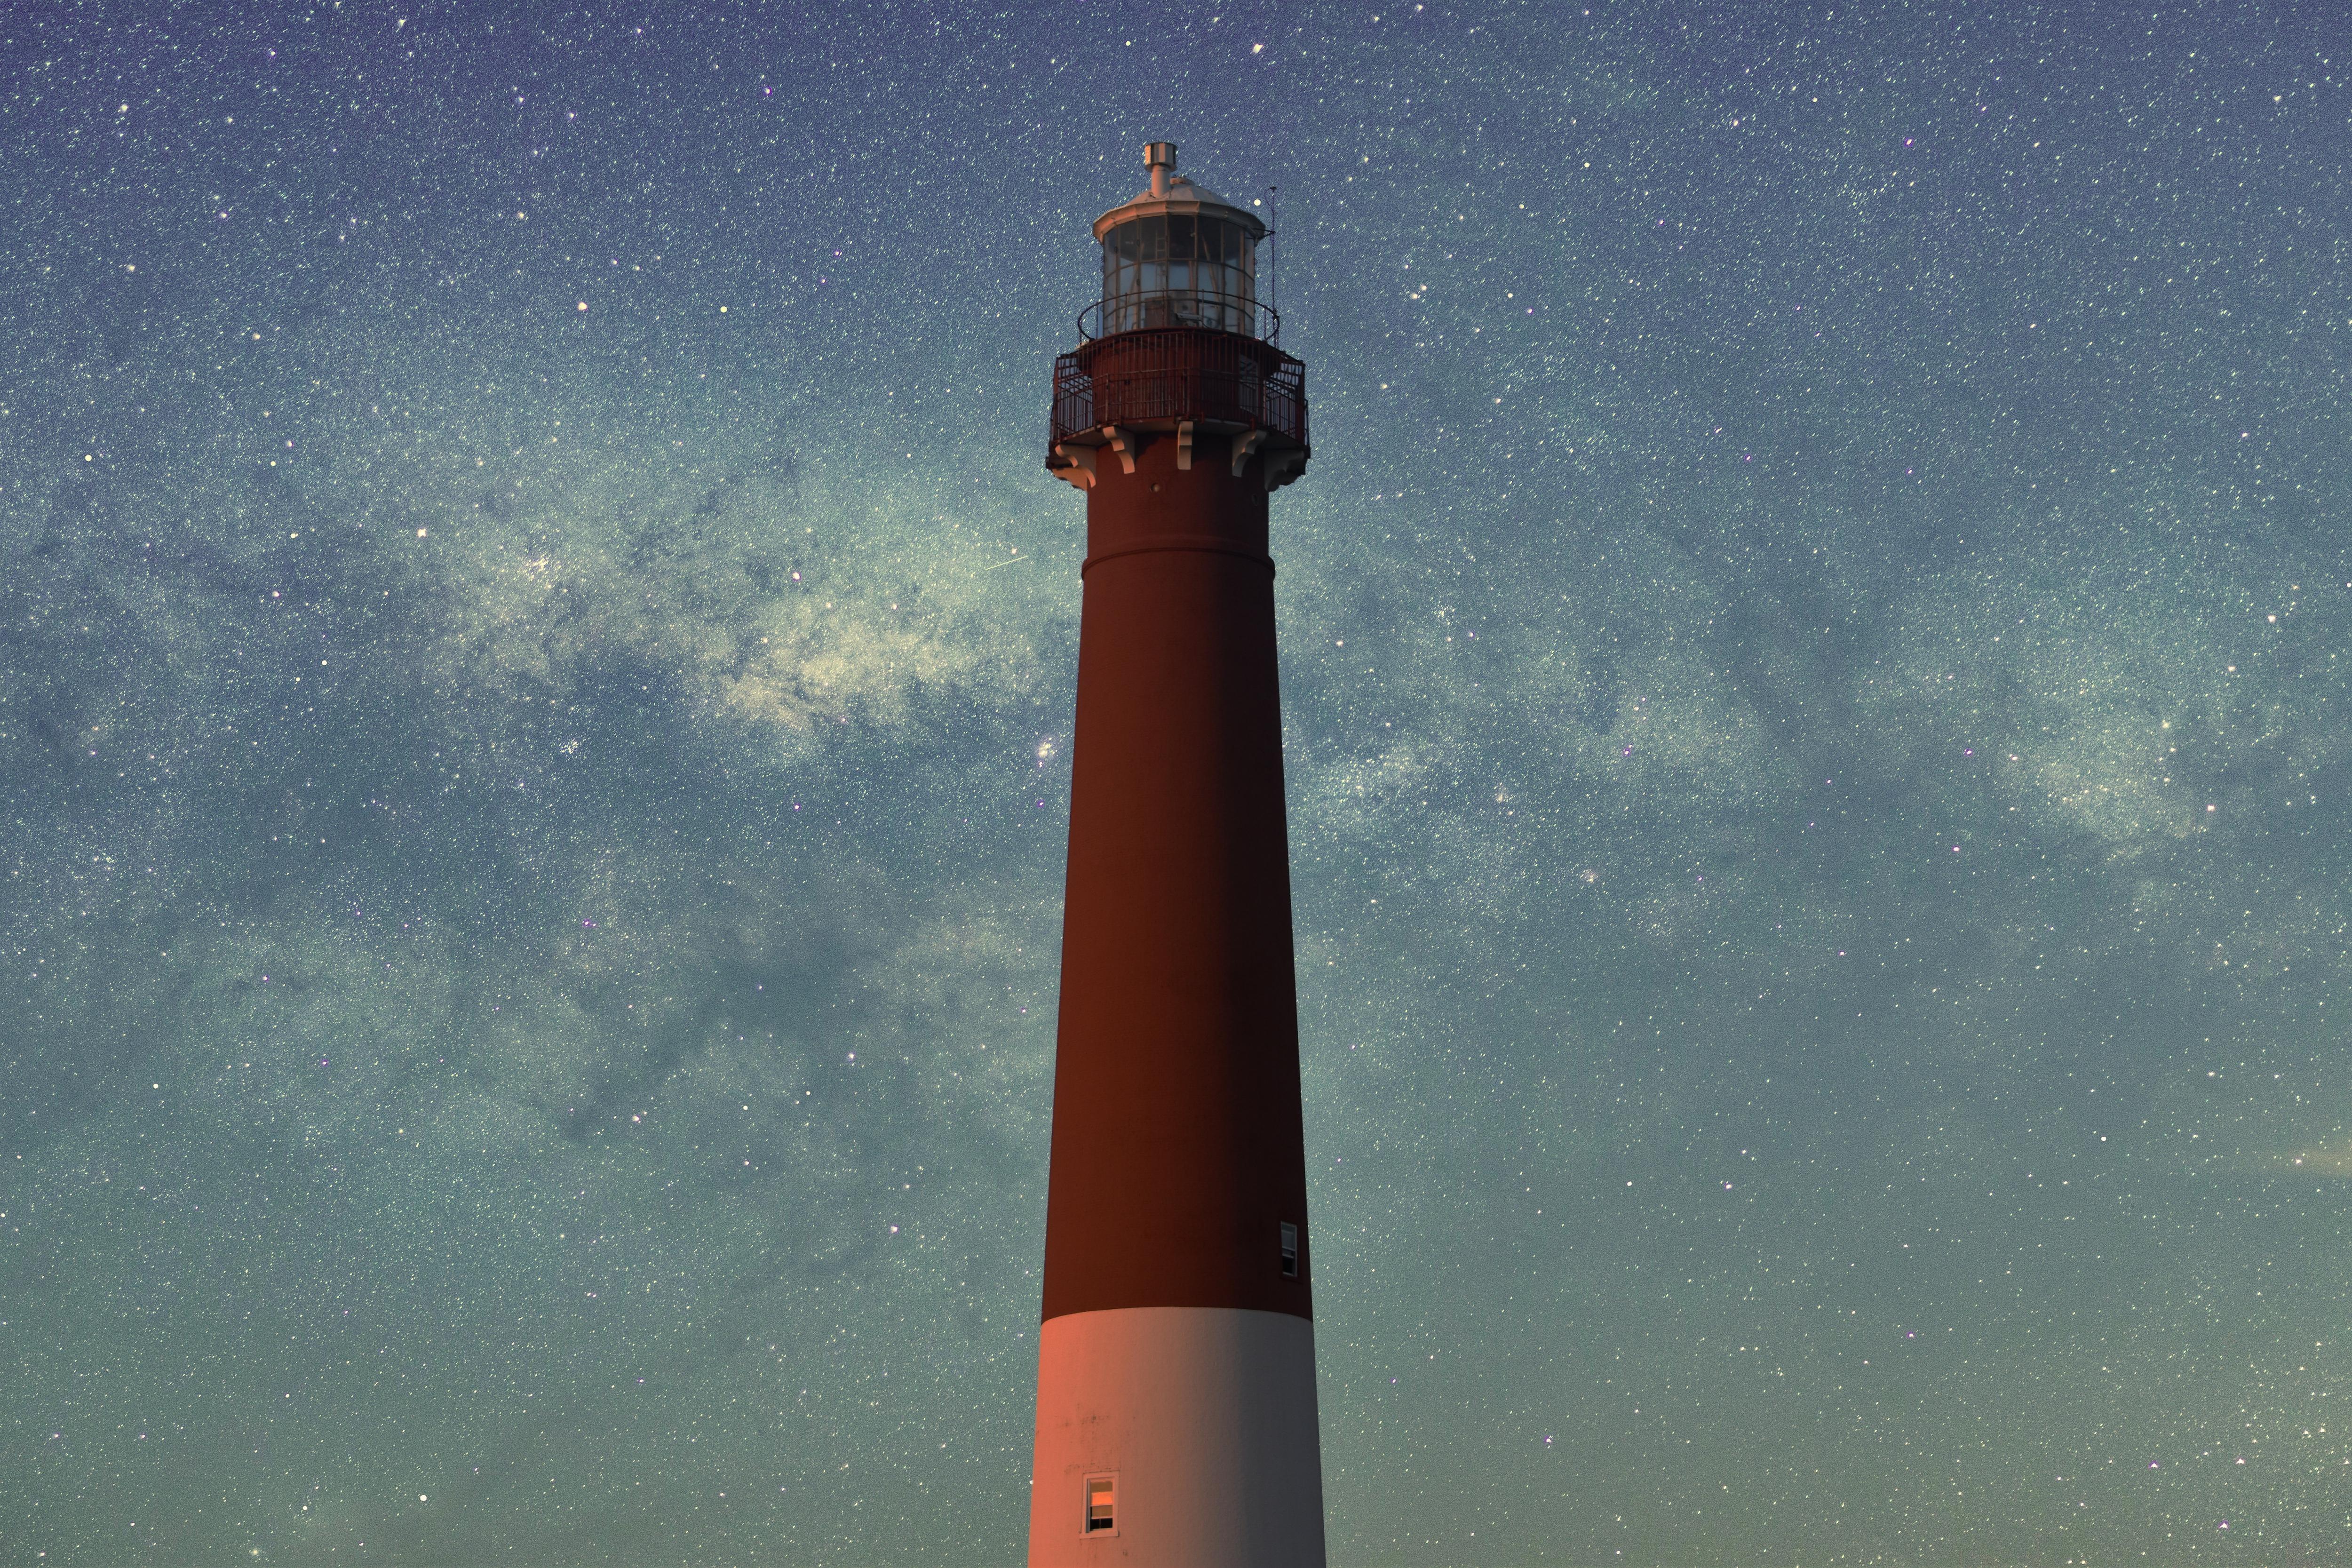 General 5000x3333 stars starry night lighthouse